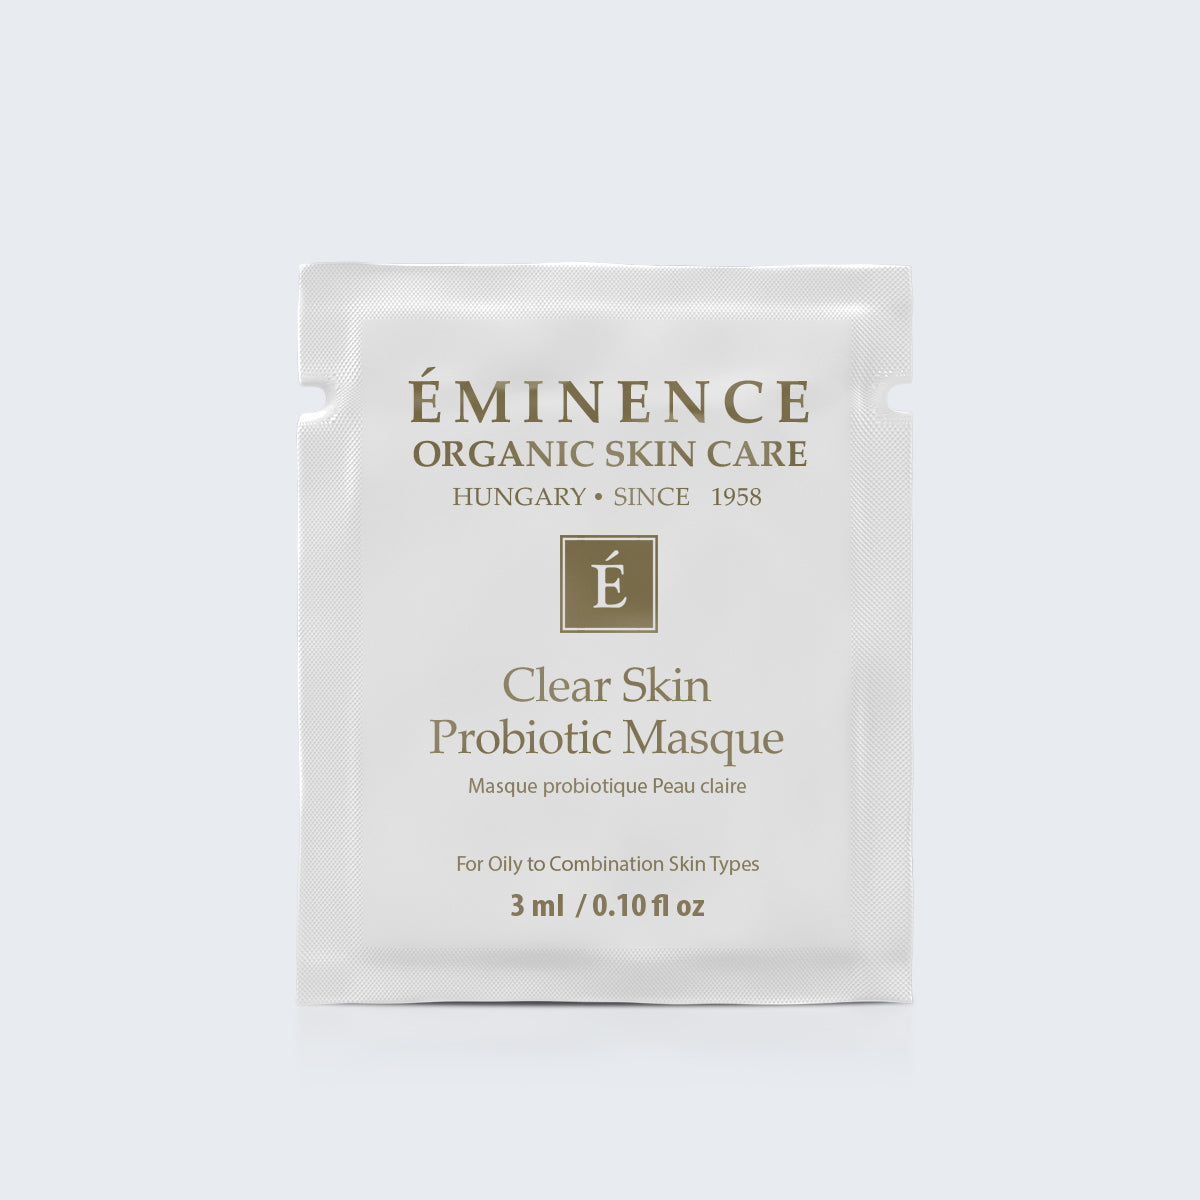 Eminence Organics Clear Skin Probiotic Masque Card Sample